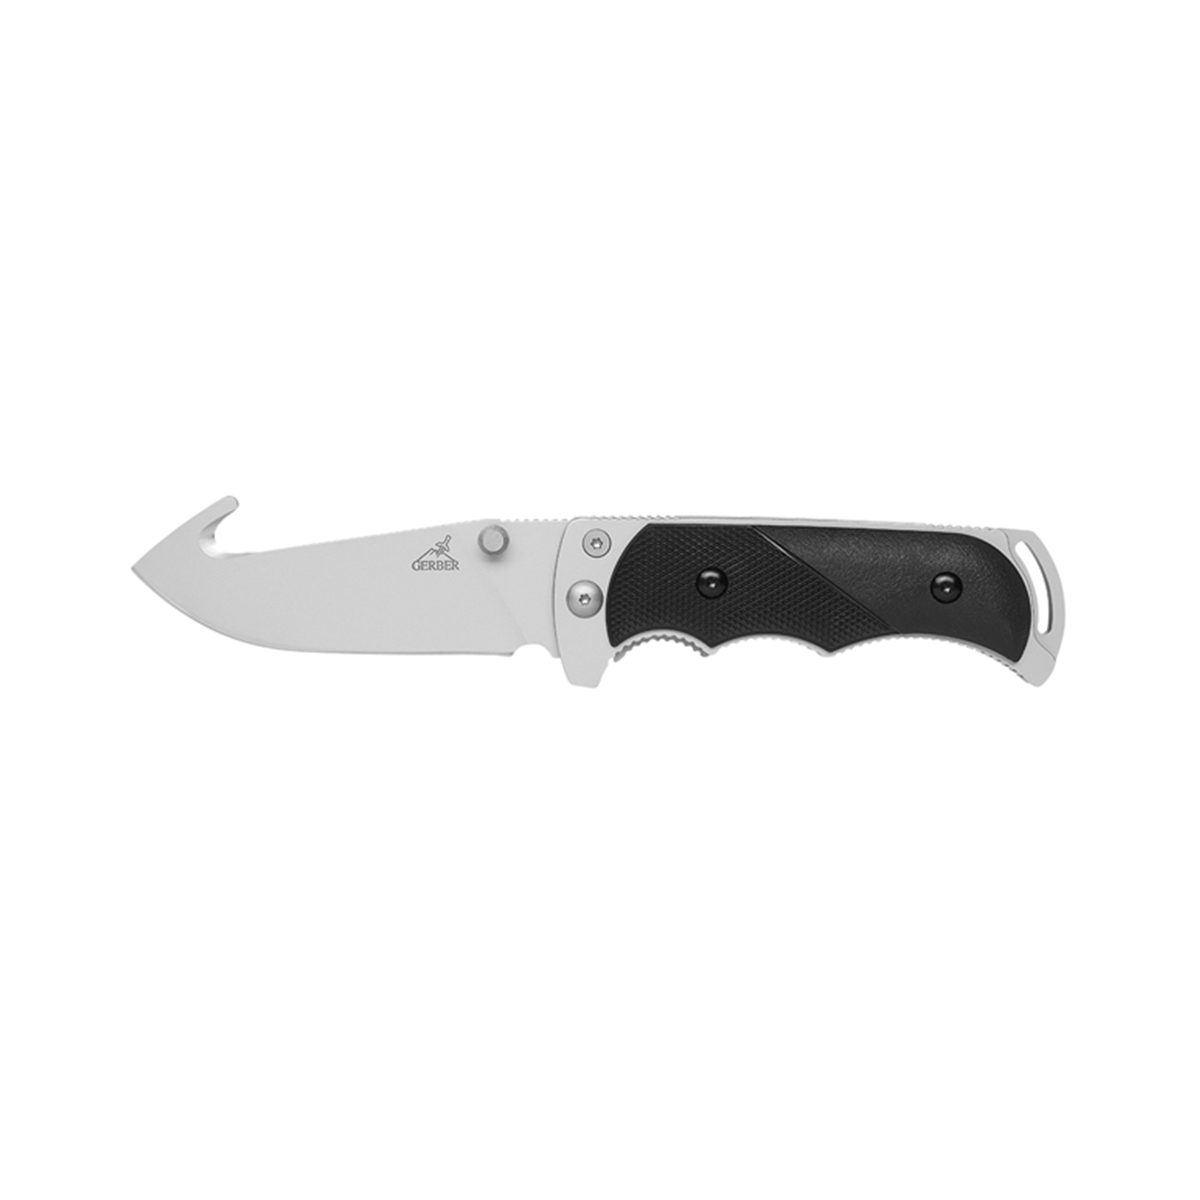 Freeman Guide Folder Series 31-000592 Folding Knife, 3.6 in L Blade, Stainless Steel Blade, 1-Blade